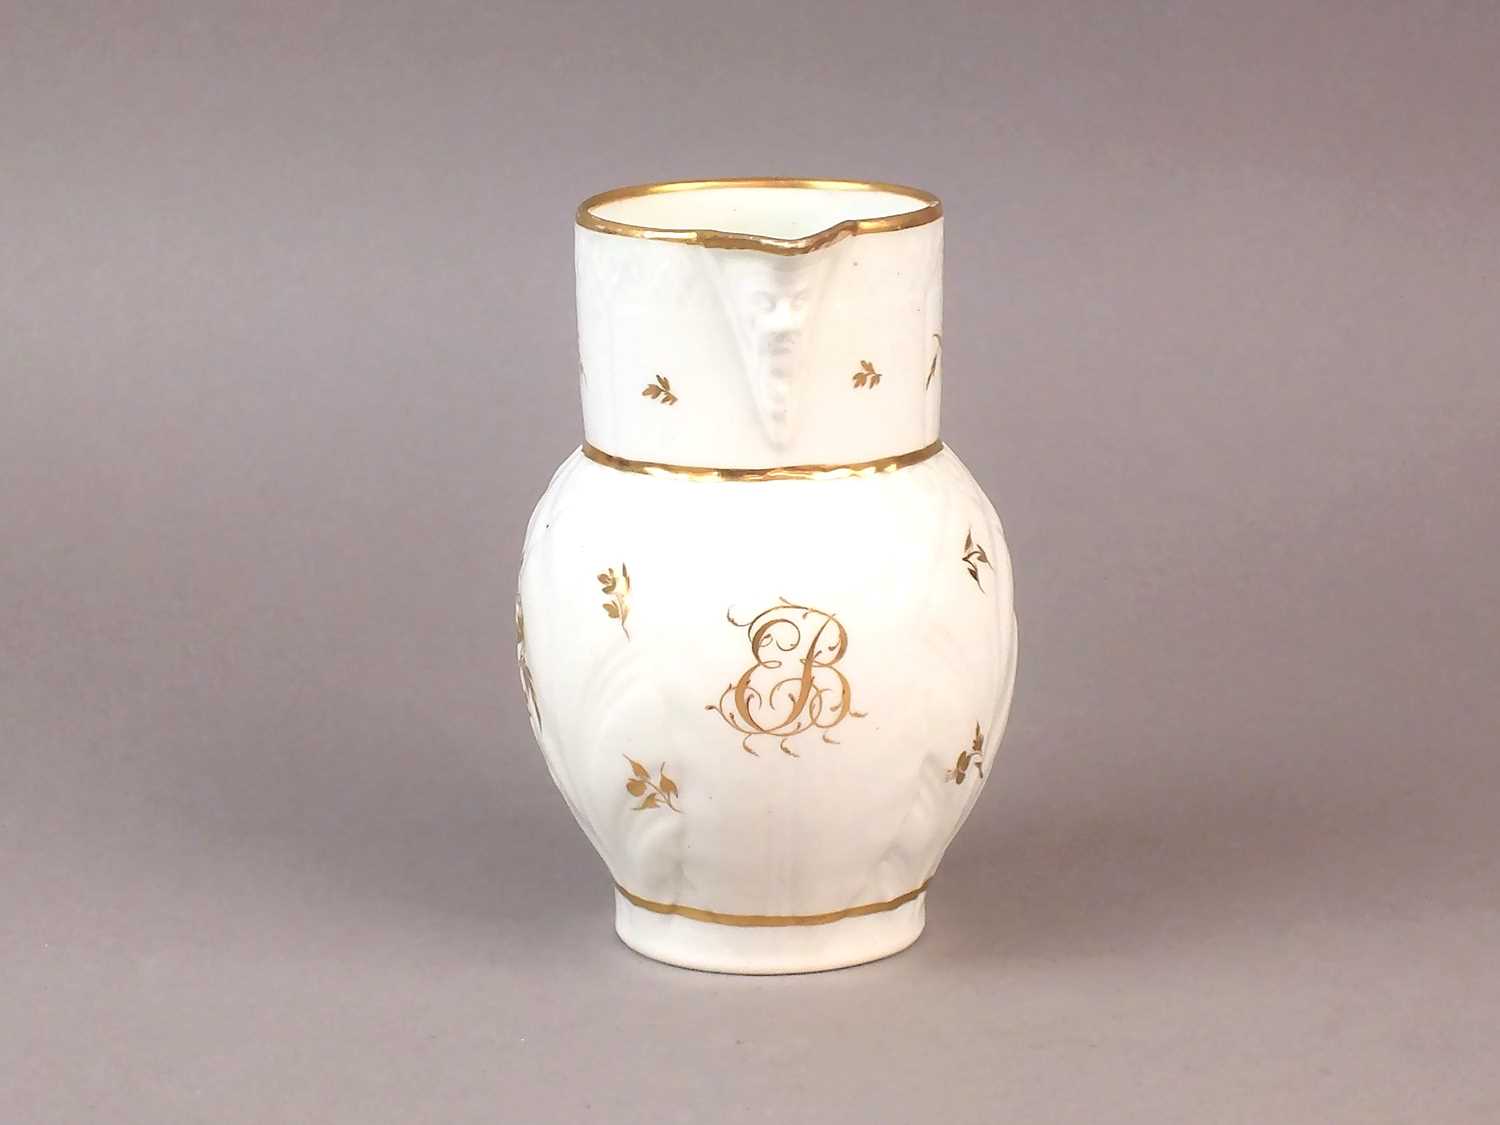 Lot 209 - Caughley monogrammed jug, circa 1790